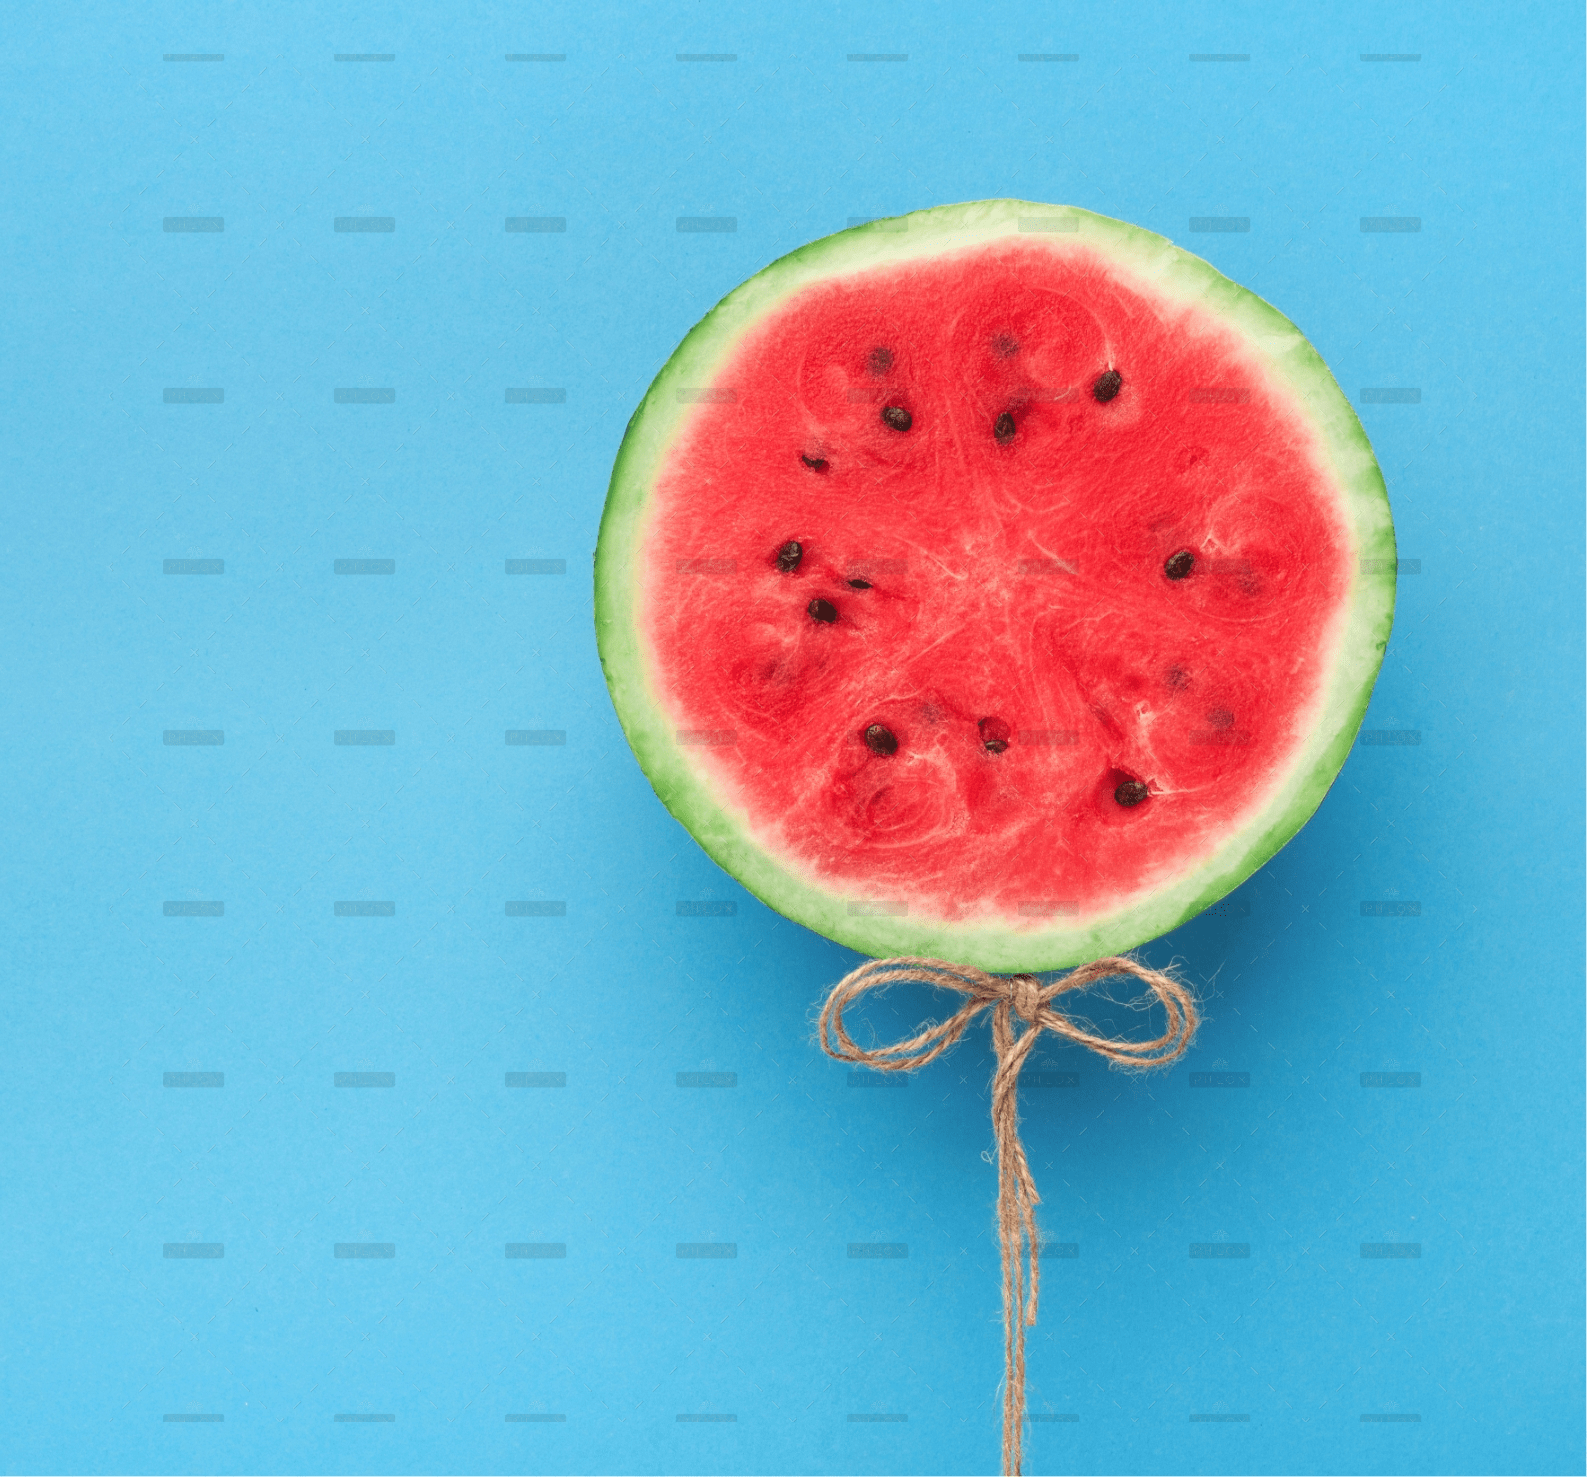 demo-attachment-3320-watermelon-balloon-on-blue-background-creative-57PNH8Q